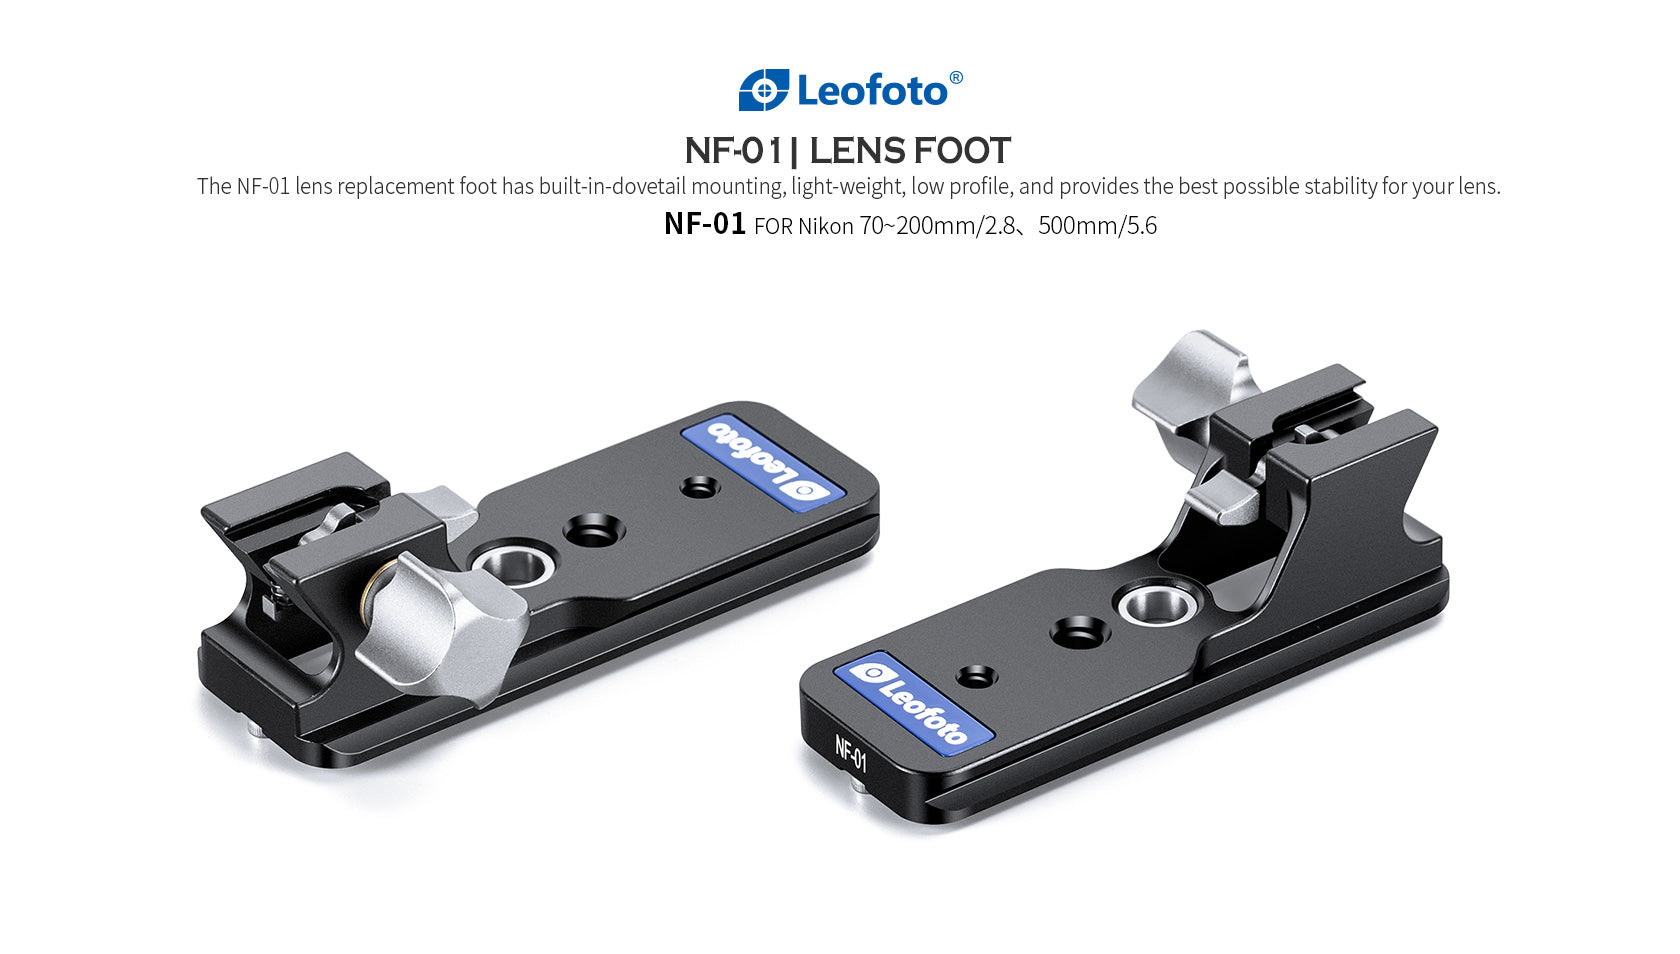 Leofoto NF-01N [Ver.2] Replacement Foot for NIKON AF-S 70-200 F/2.8E,500 F/5.6E